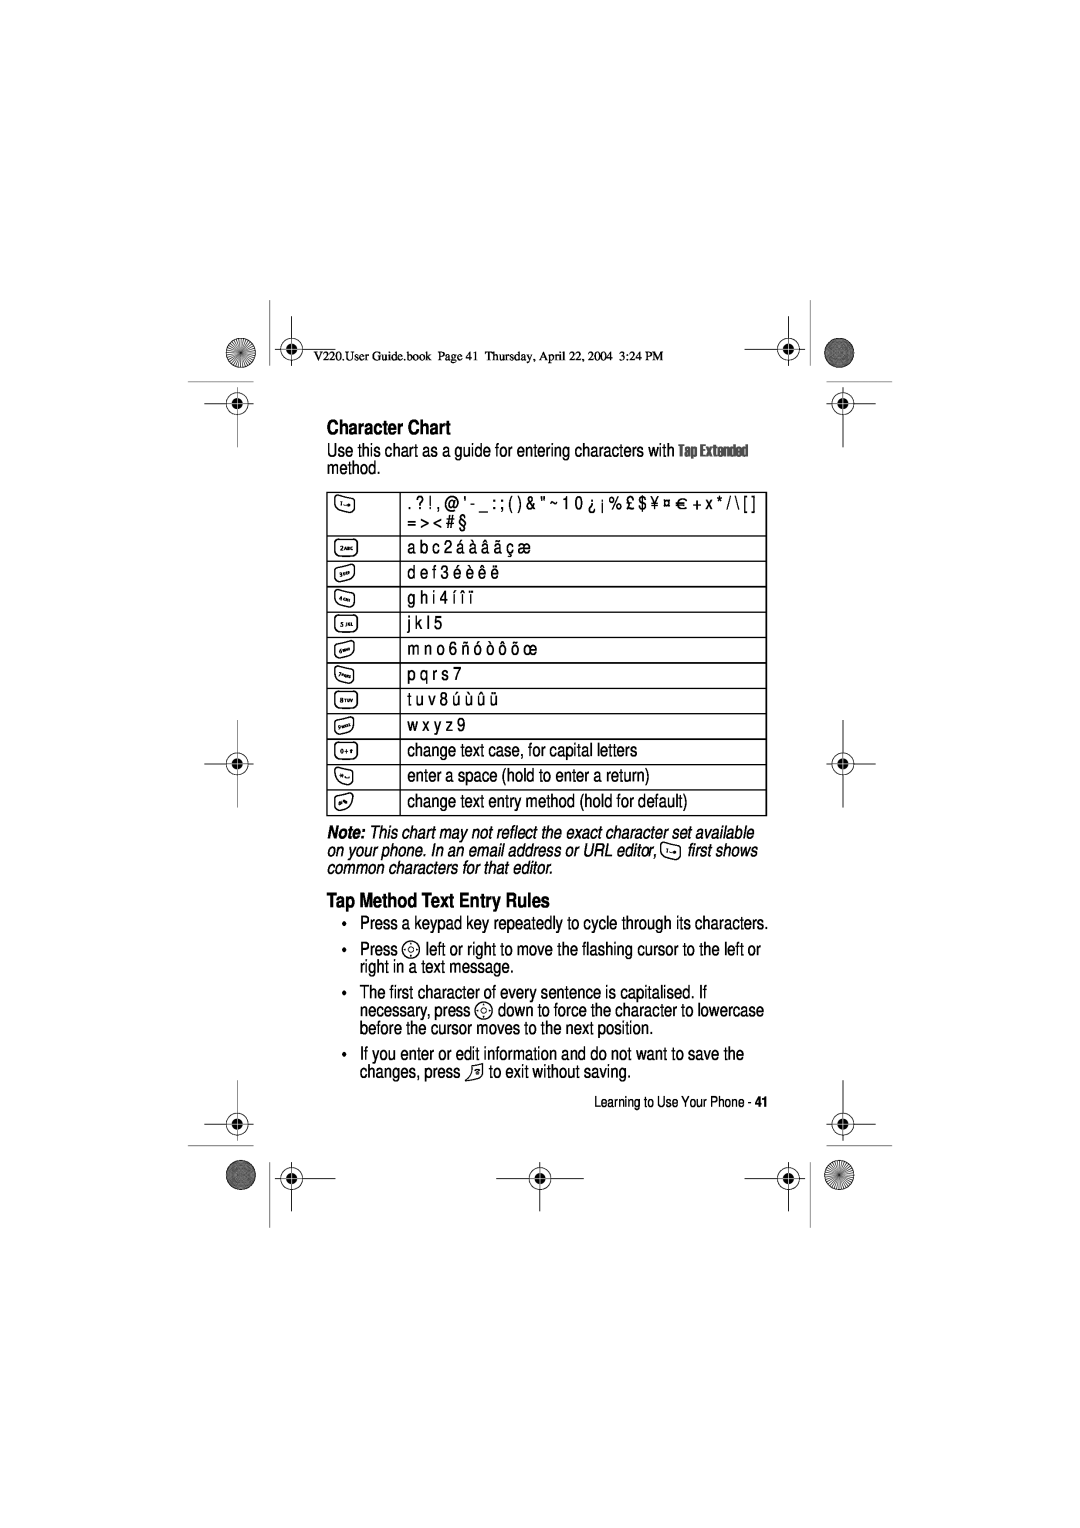 Motorola V220 manual Character Chart, Tap Method Text Entry Rules 